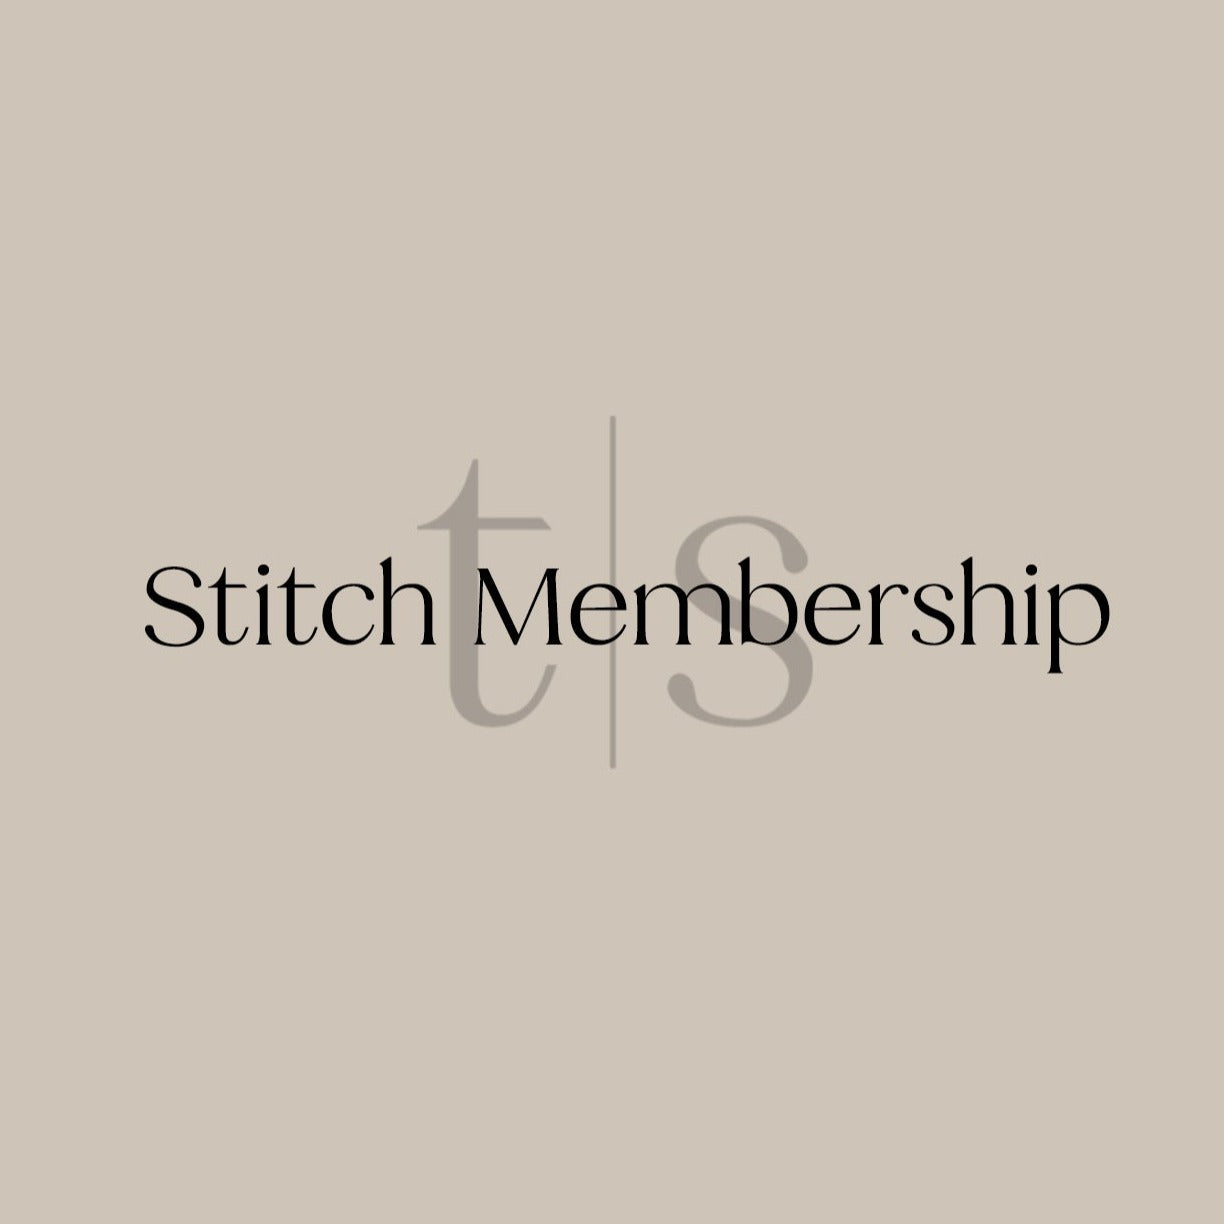 Stitch Membership